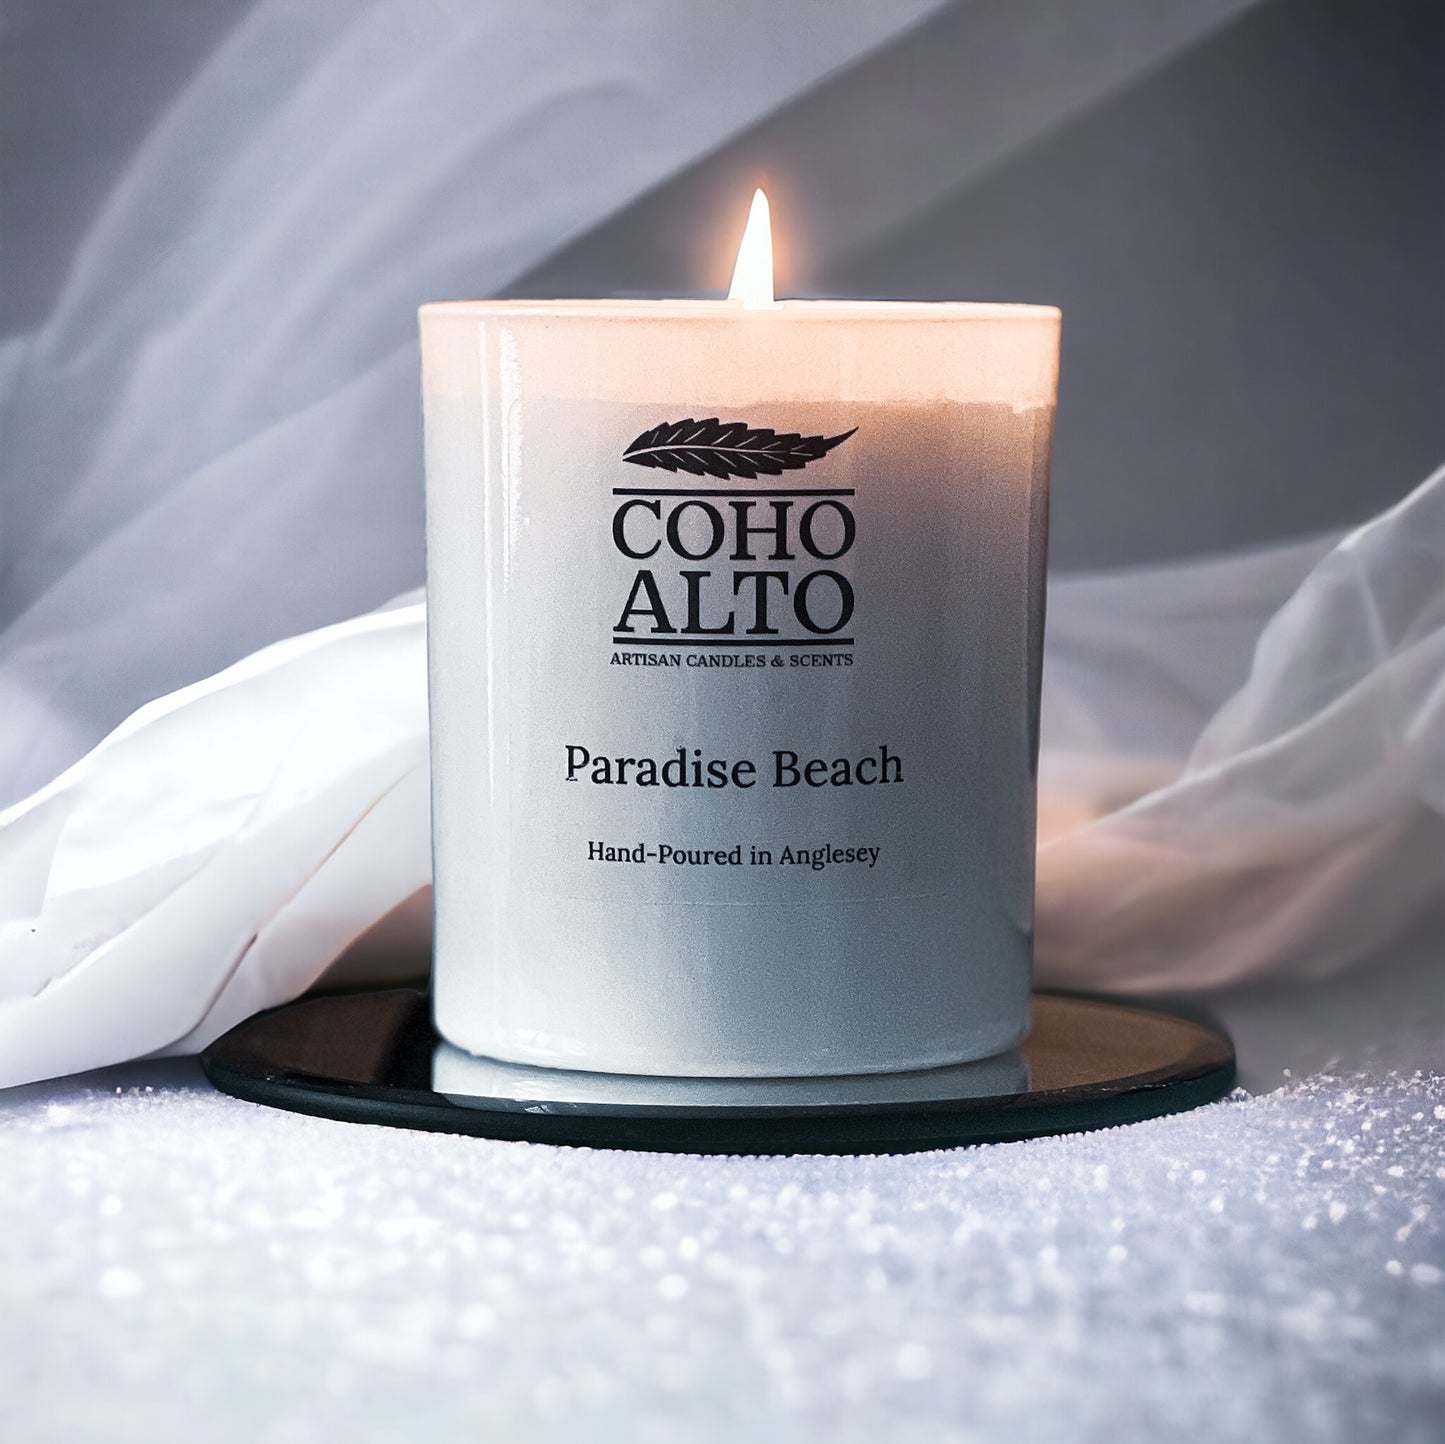 COHO ALTO Paradise Beach Candle